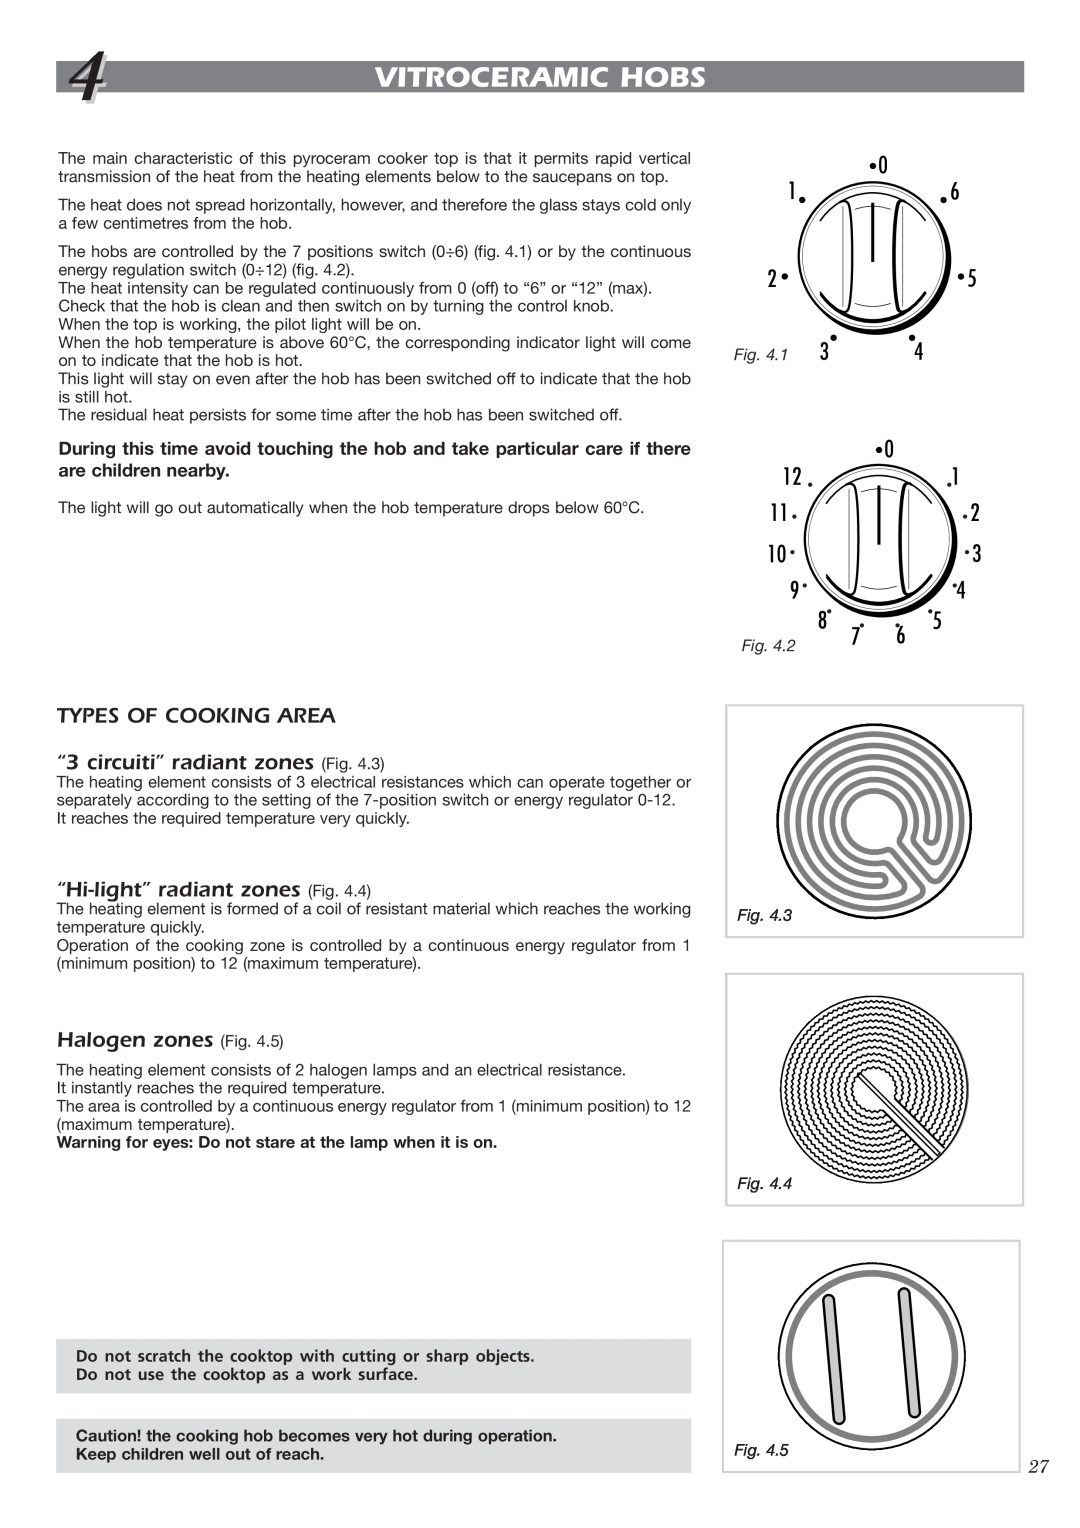 CDA HCC360 manual Vitroceramic Hobs, Types Of Cooking Area, “3 circuiti” radiant zones Fig, “Hi-light”radiant zones Fig 